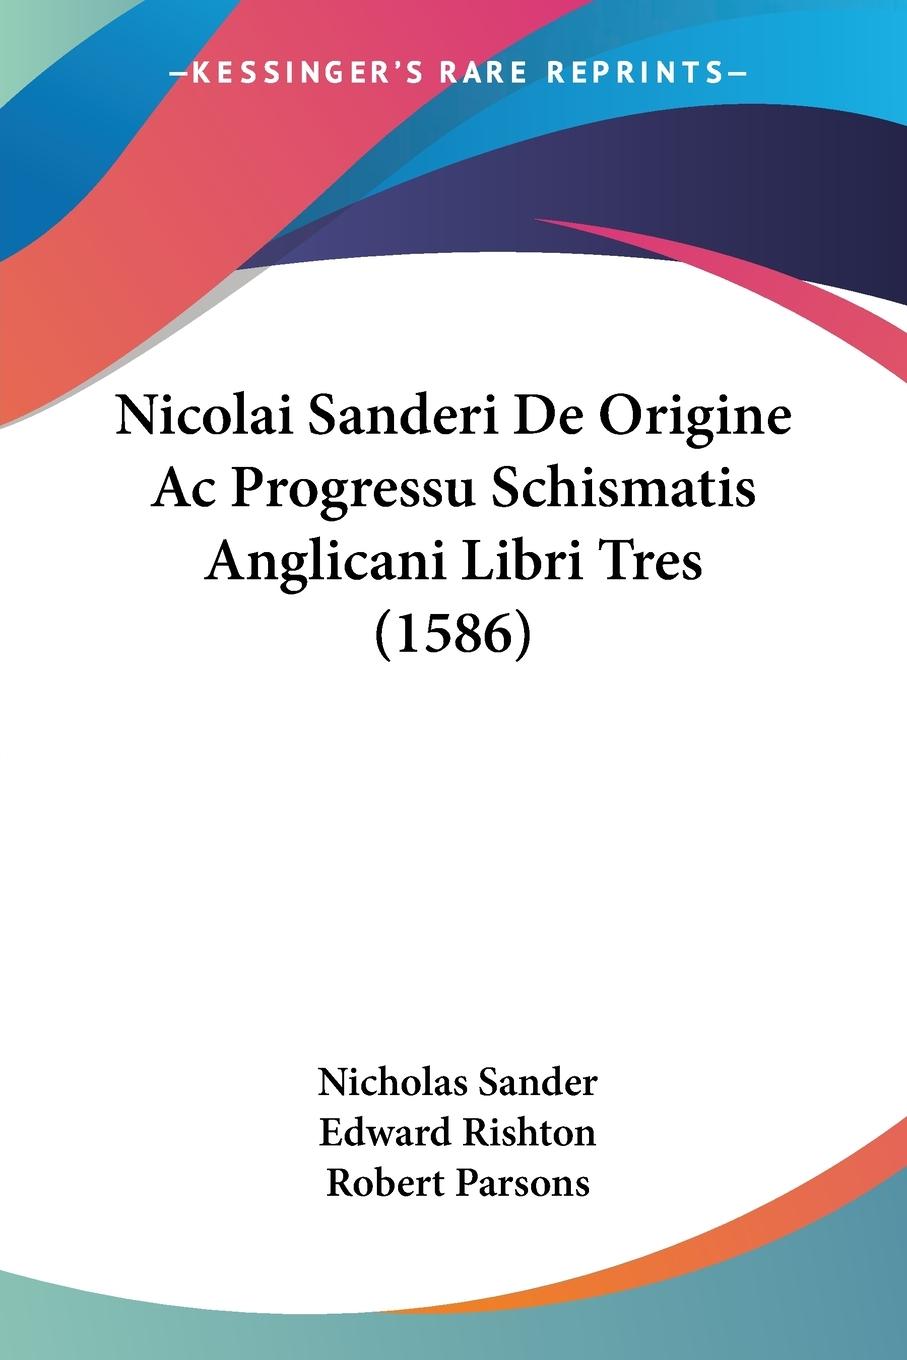 Nicolai Sanderi De Origine Ac Progressu Schismatis Anglicani Libri Tres (1586) - Sander, Nicholas